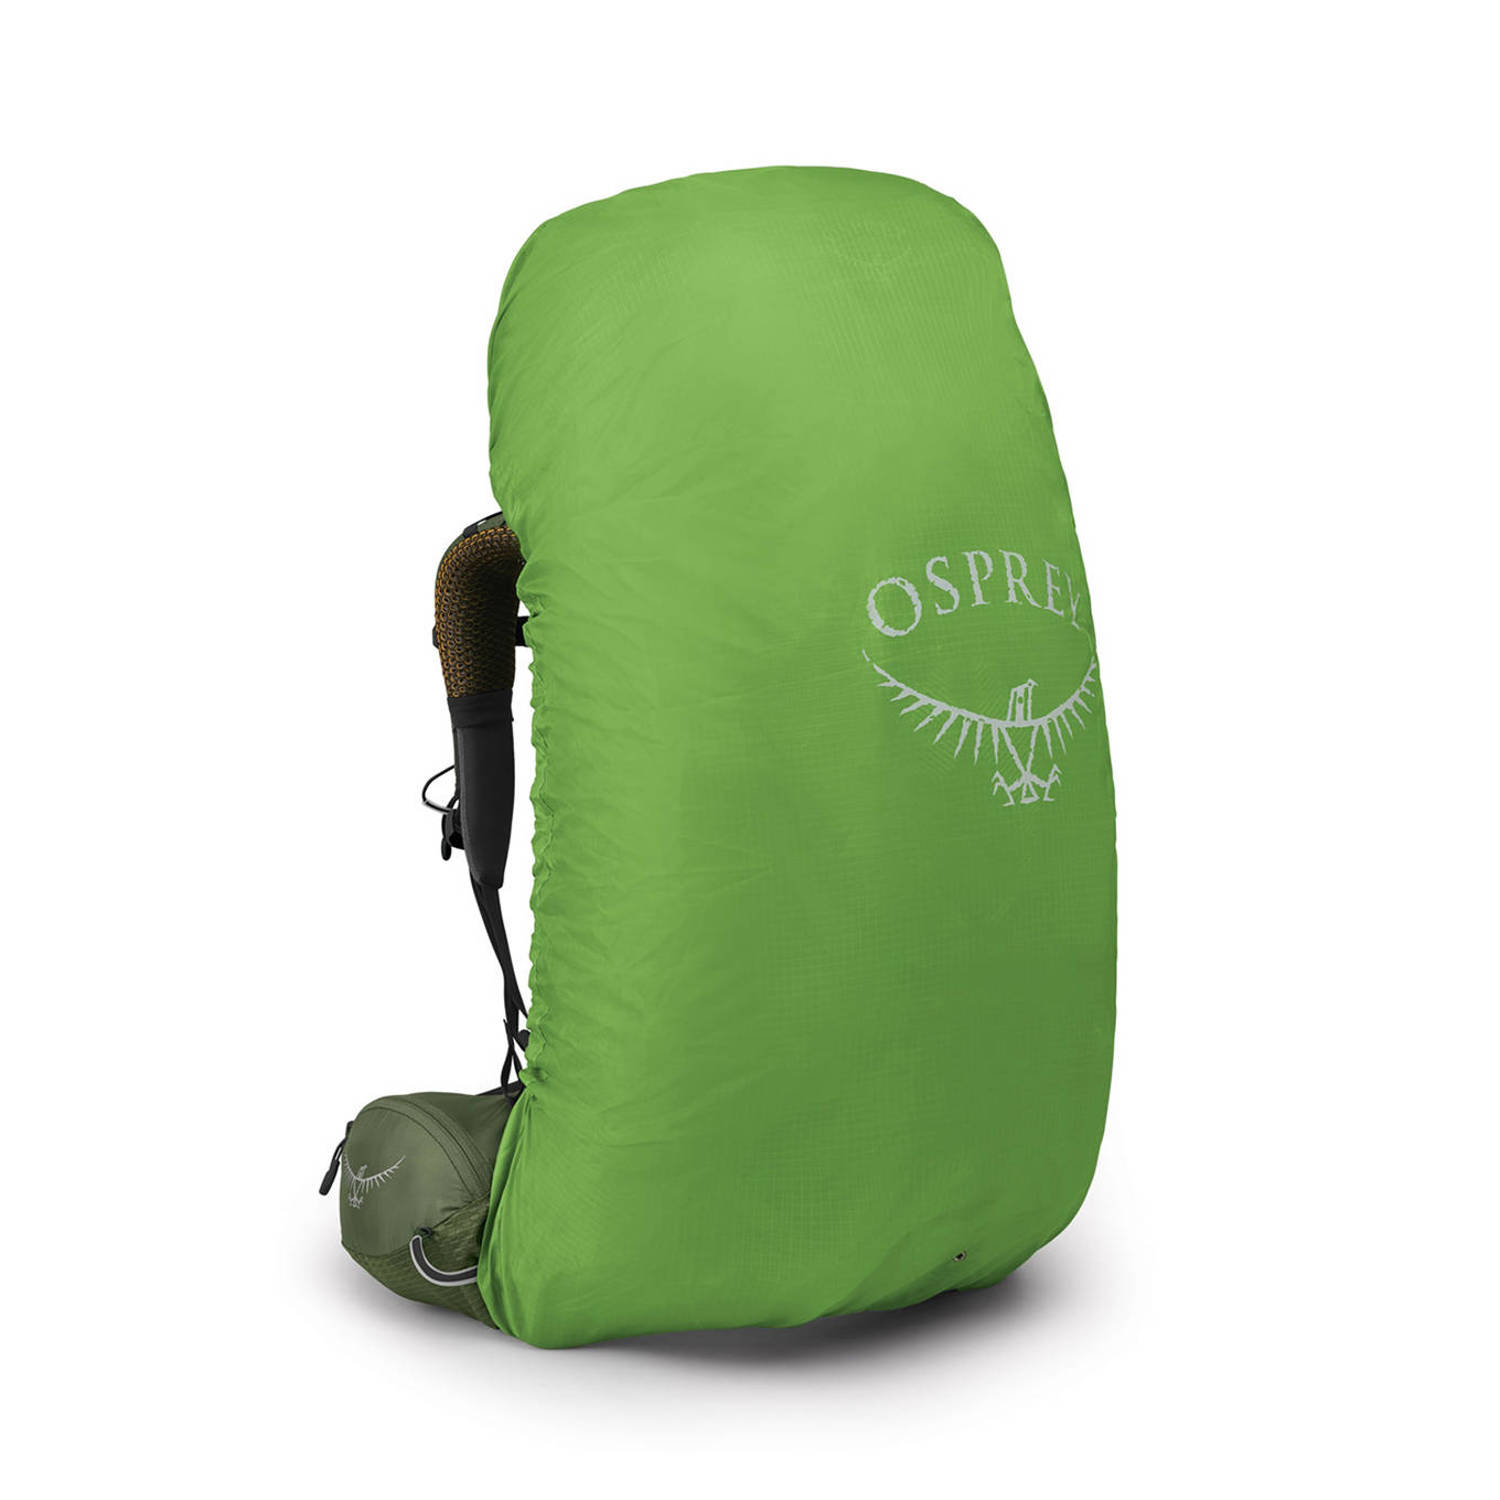 Osprey backpack Atmos AG 65L L XL groen